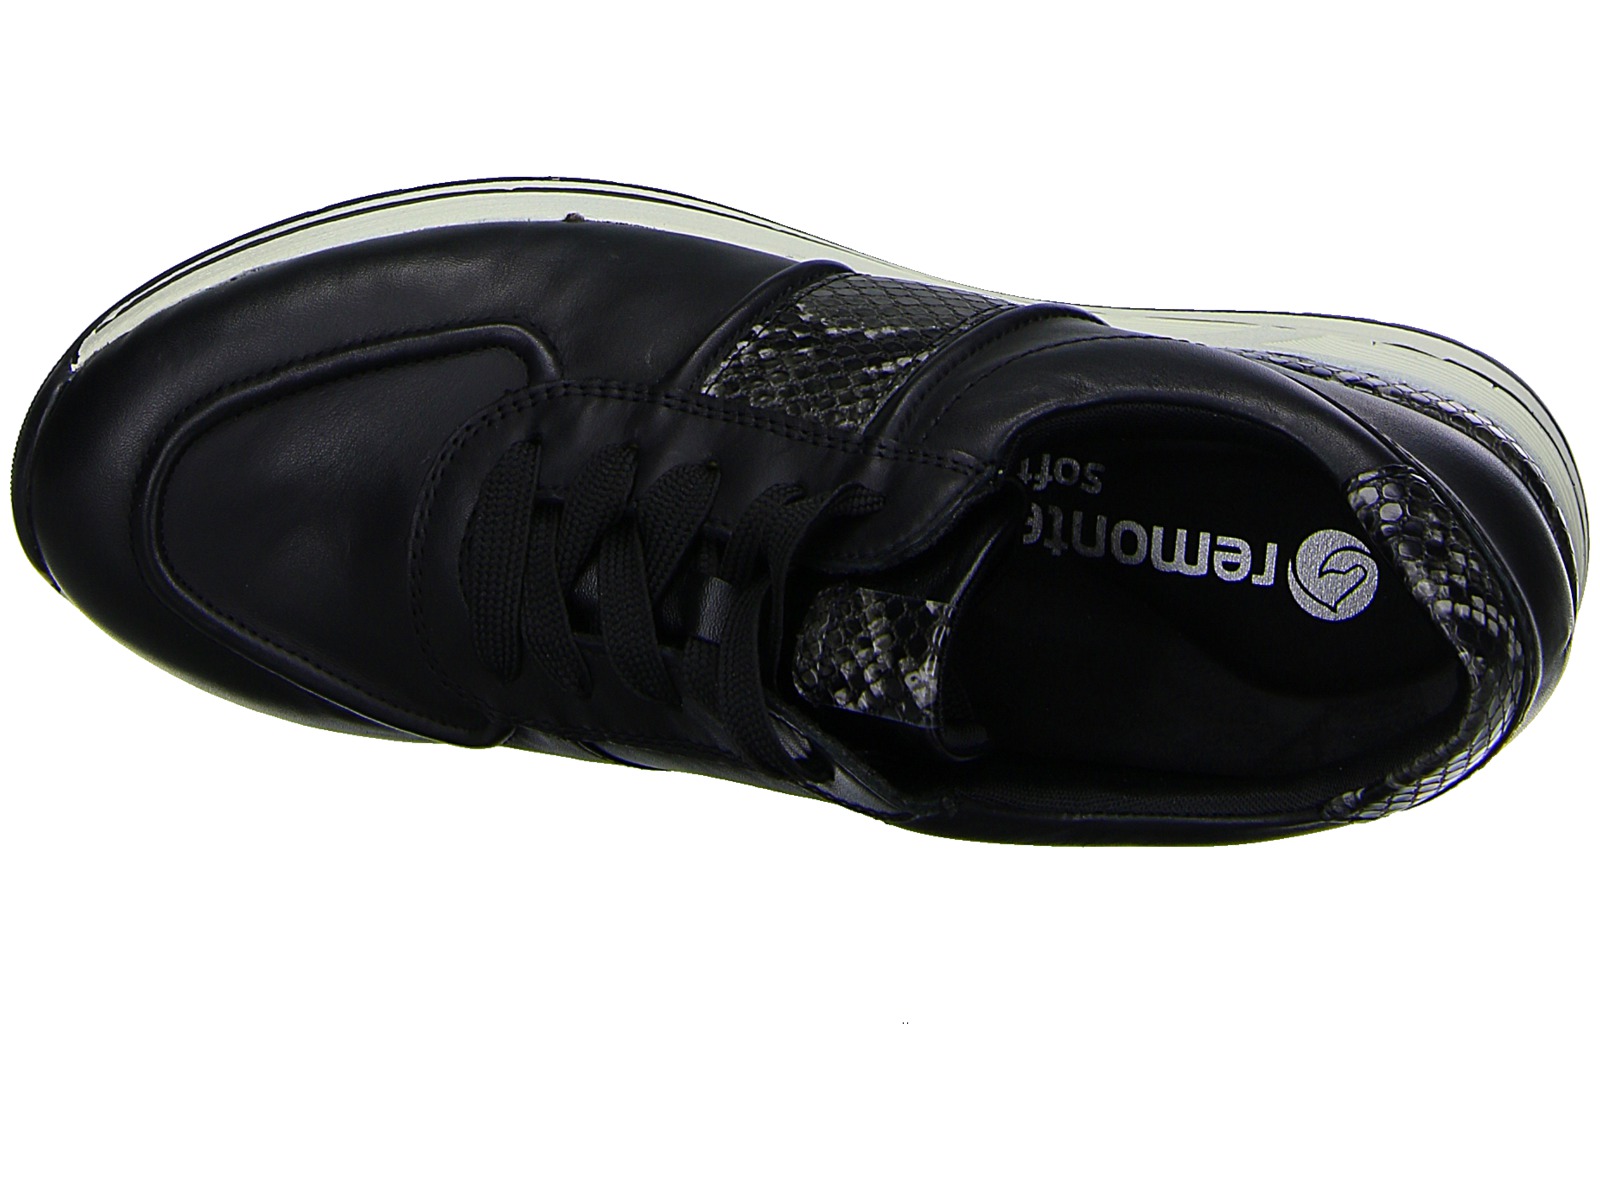 Remonte Sneaker D3205-01